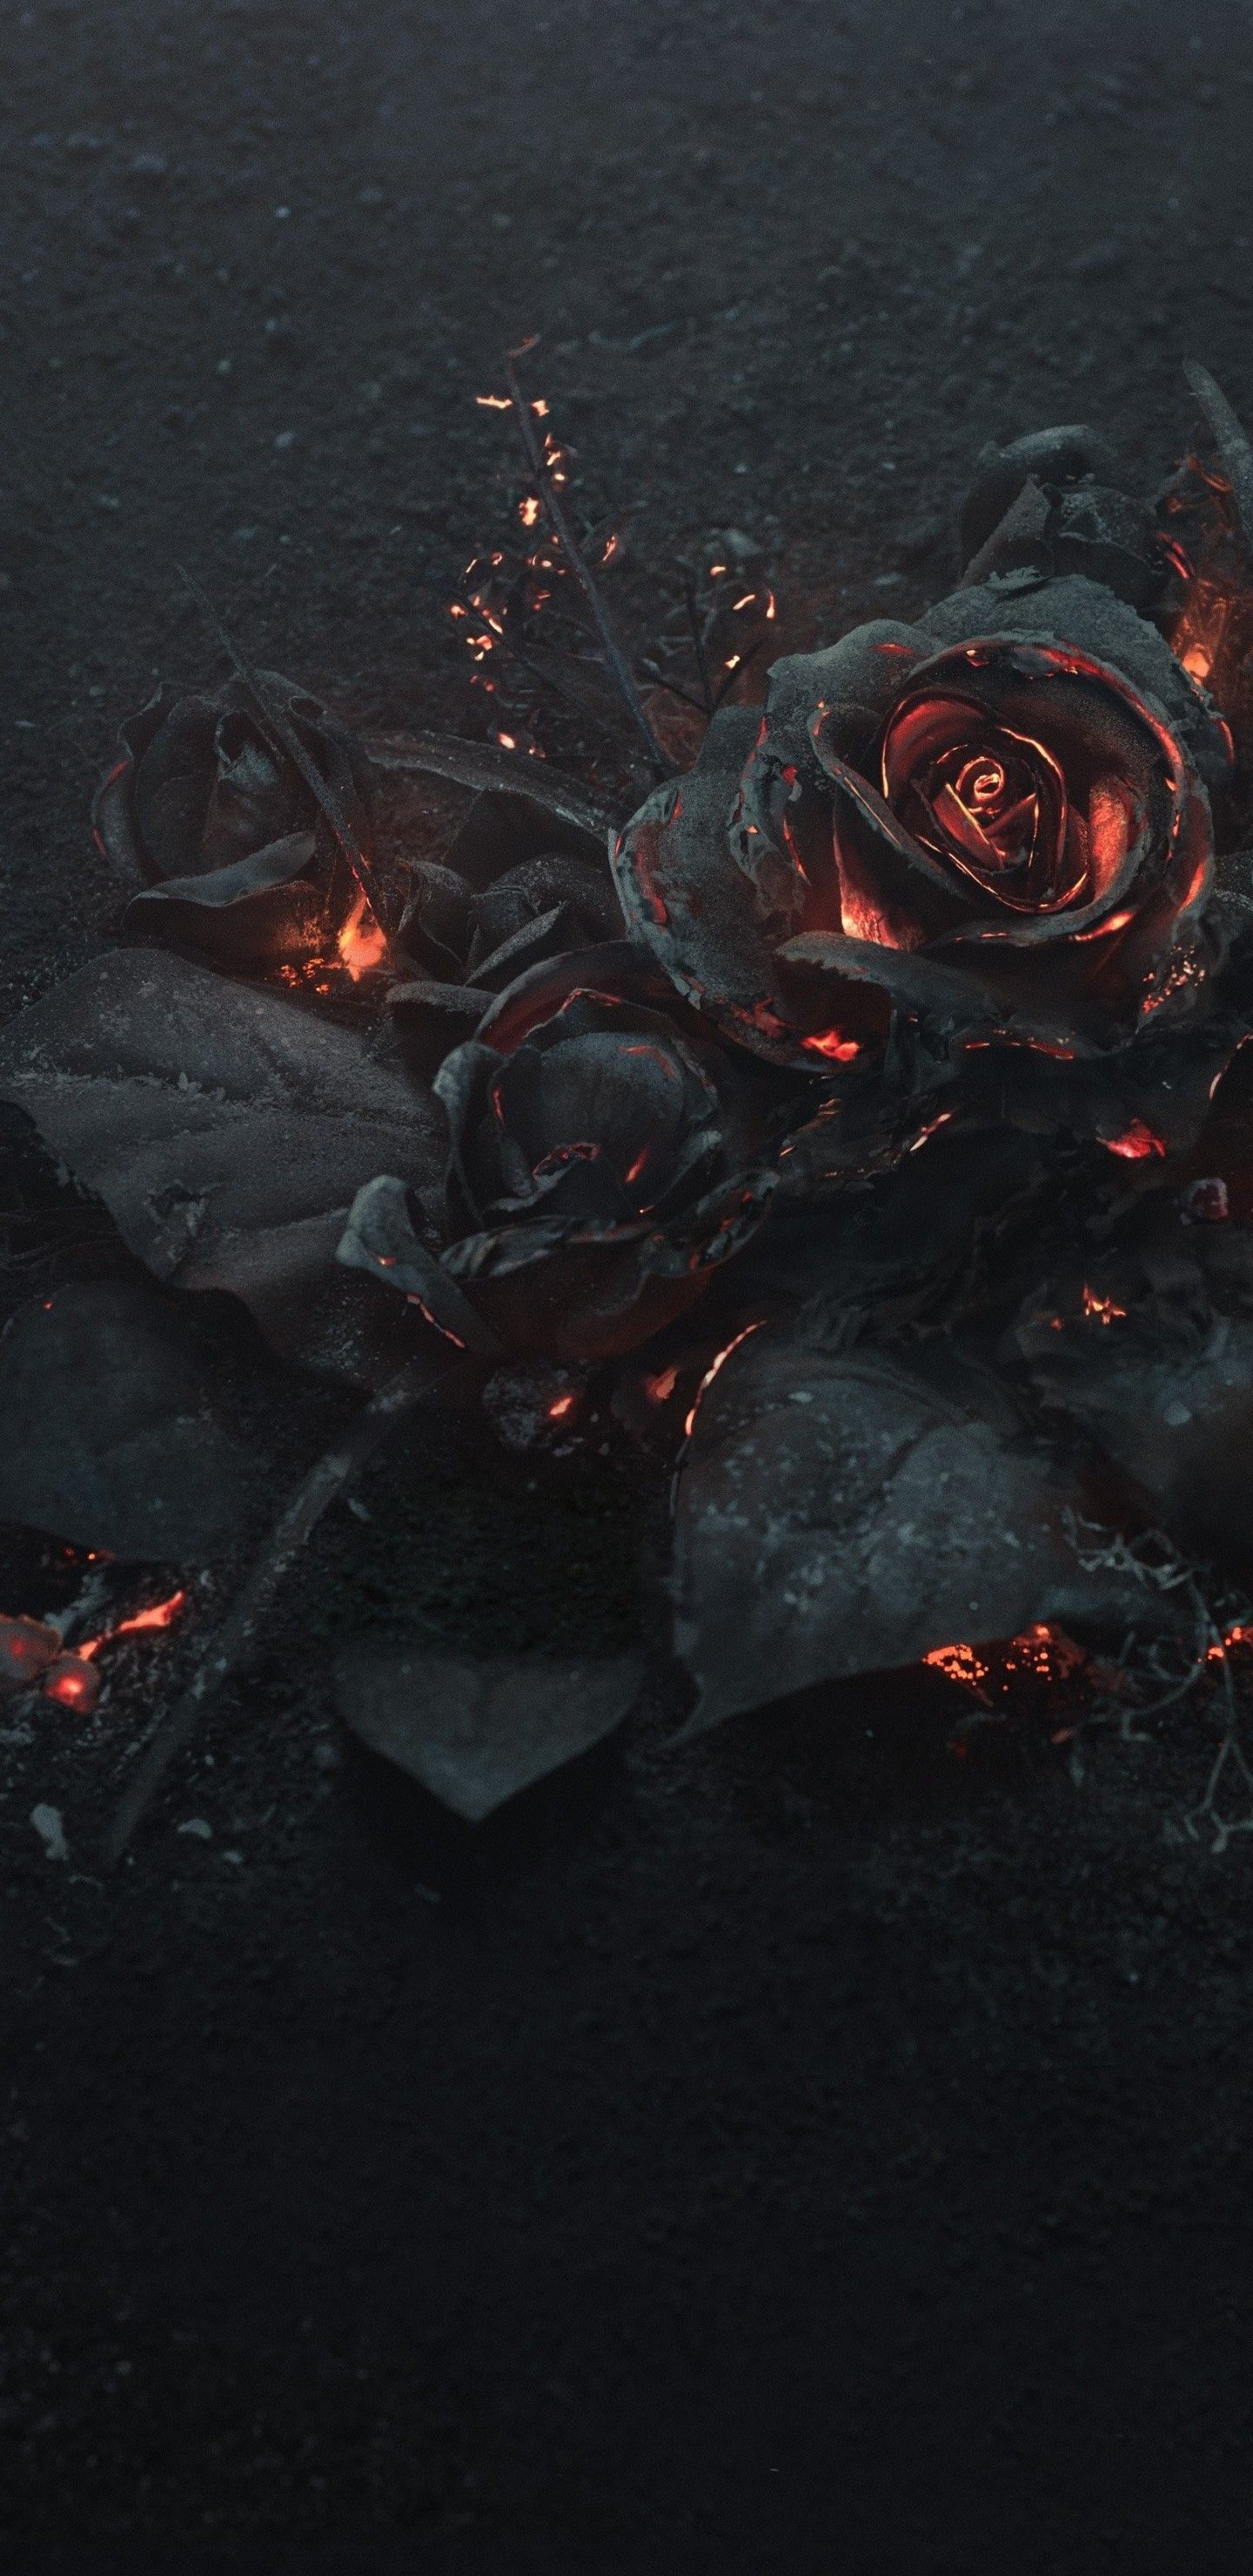 Download 1440x2960 Rose Ashes, Fire, Black, Dark Theme Wallpaper